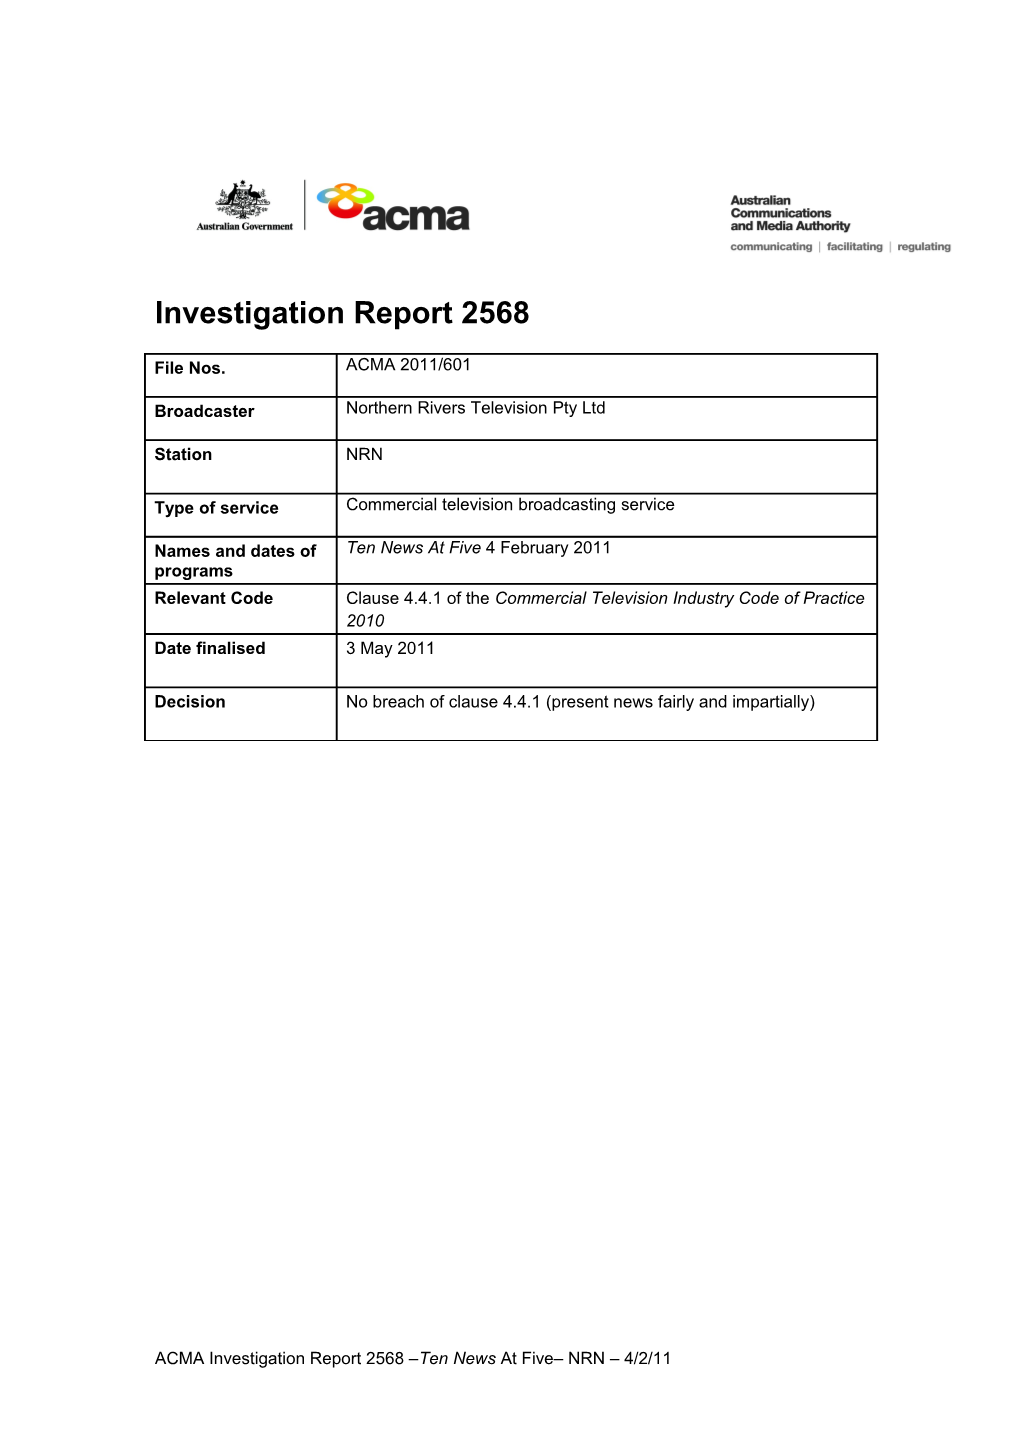 NRN - ACMA Investigation Report 2568